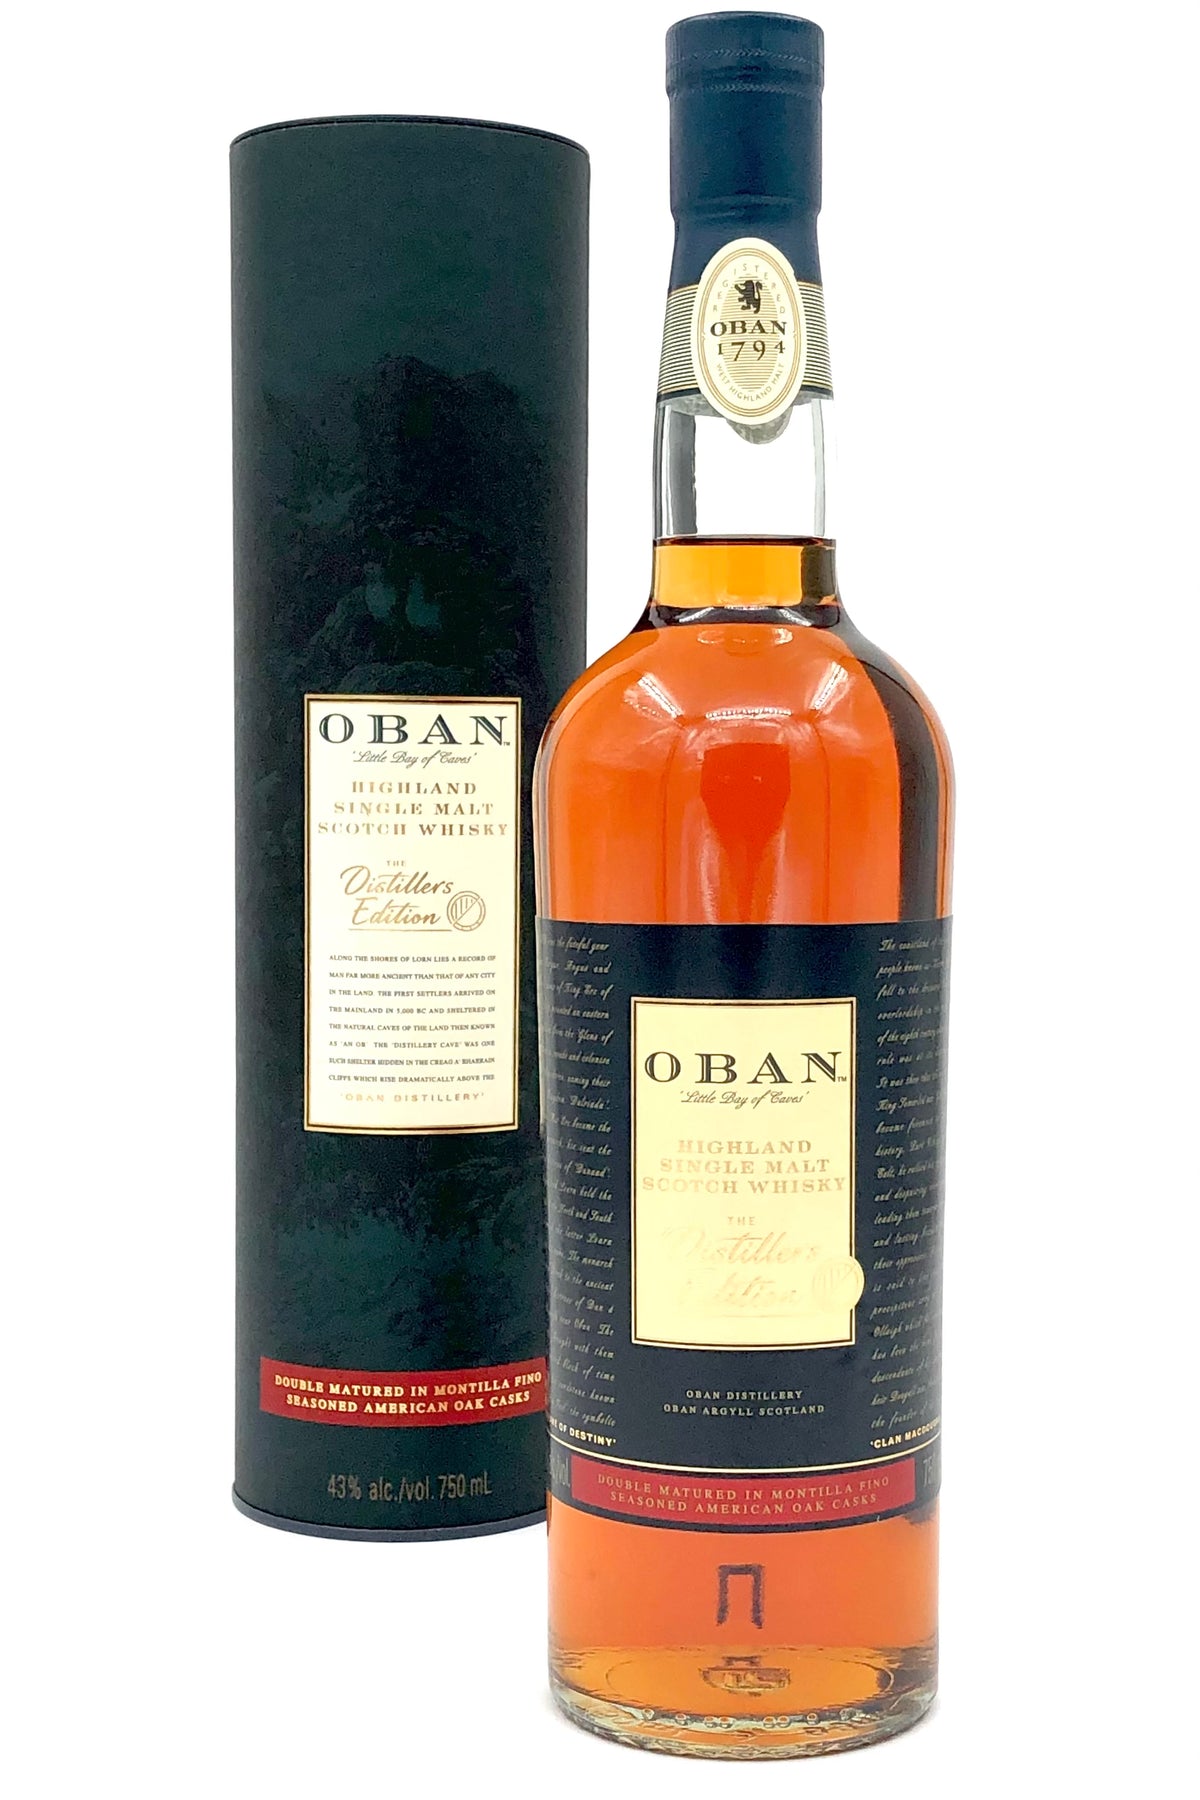 Oban Distillers Edition Vintage Scotch Whisky